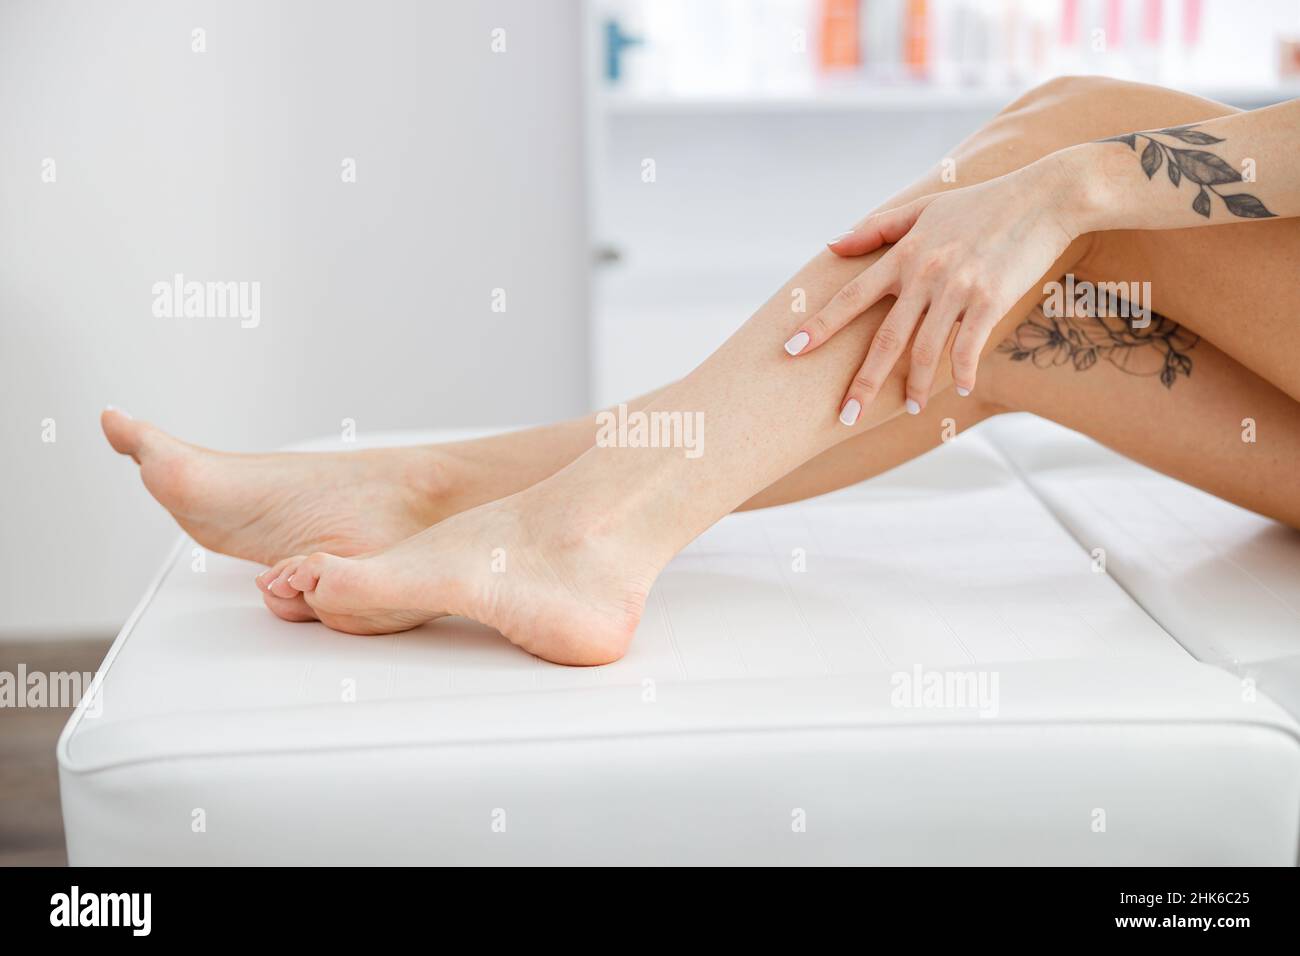 Female legs after epilation procedure in beauty salon Stock Photo